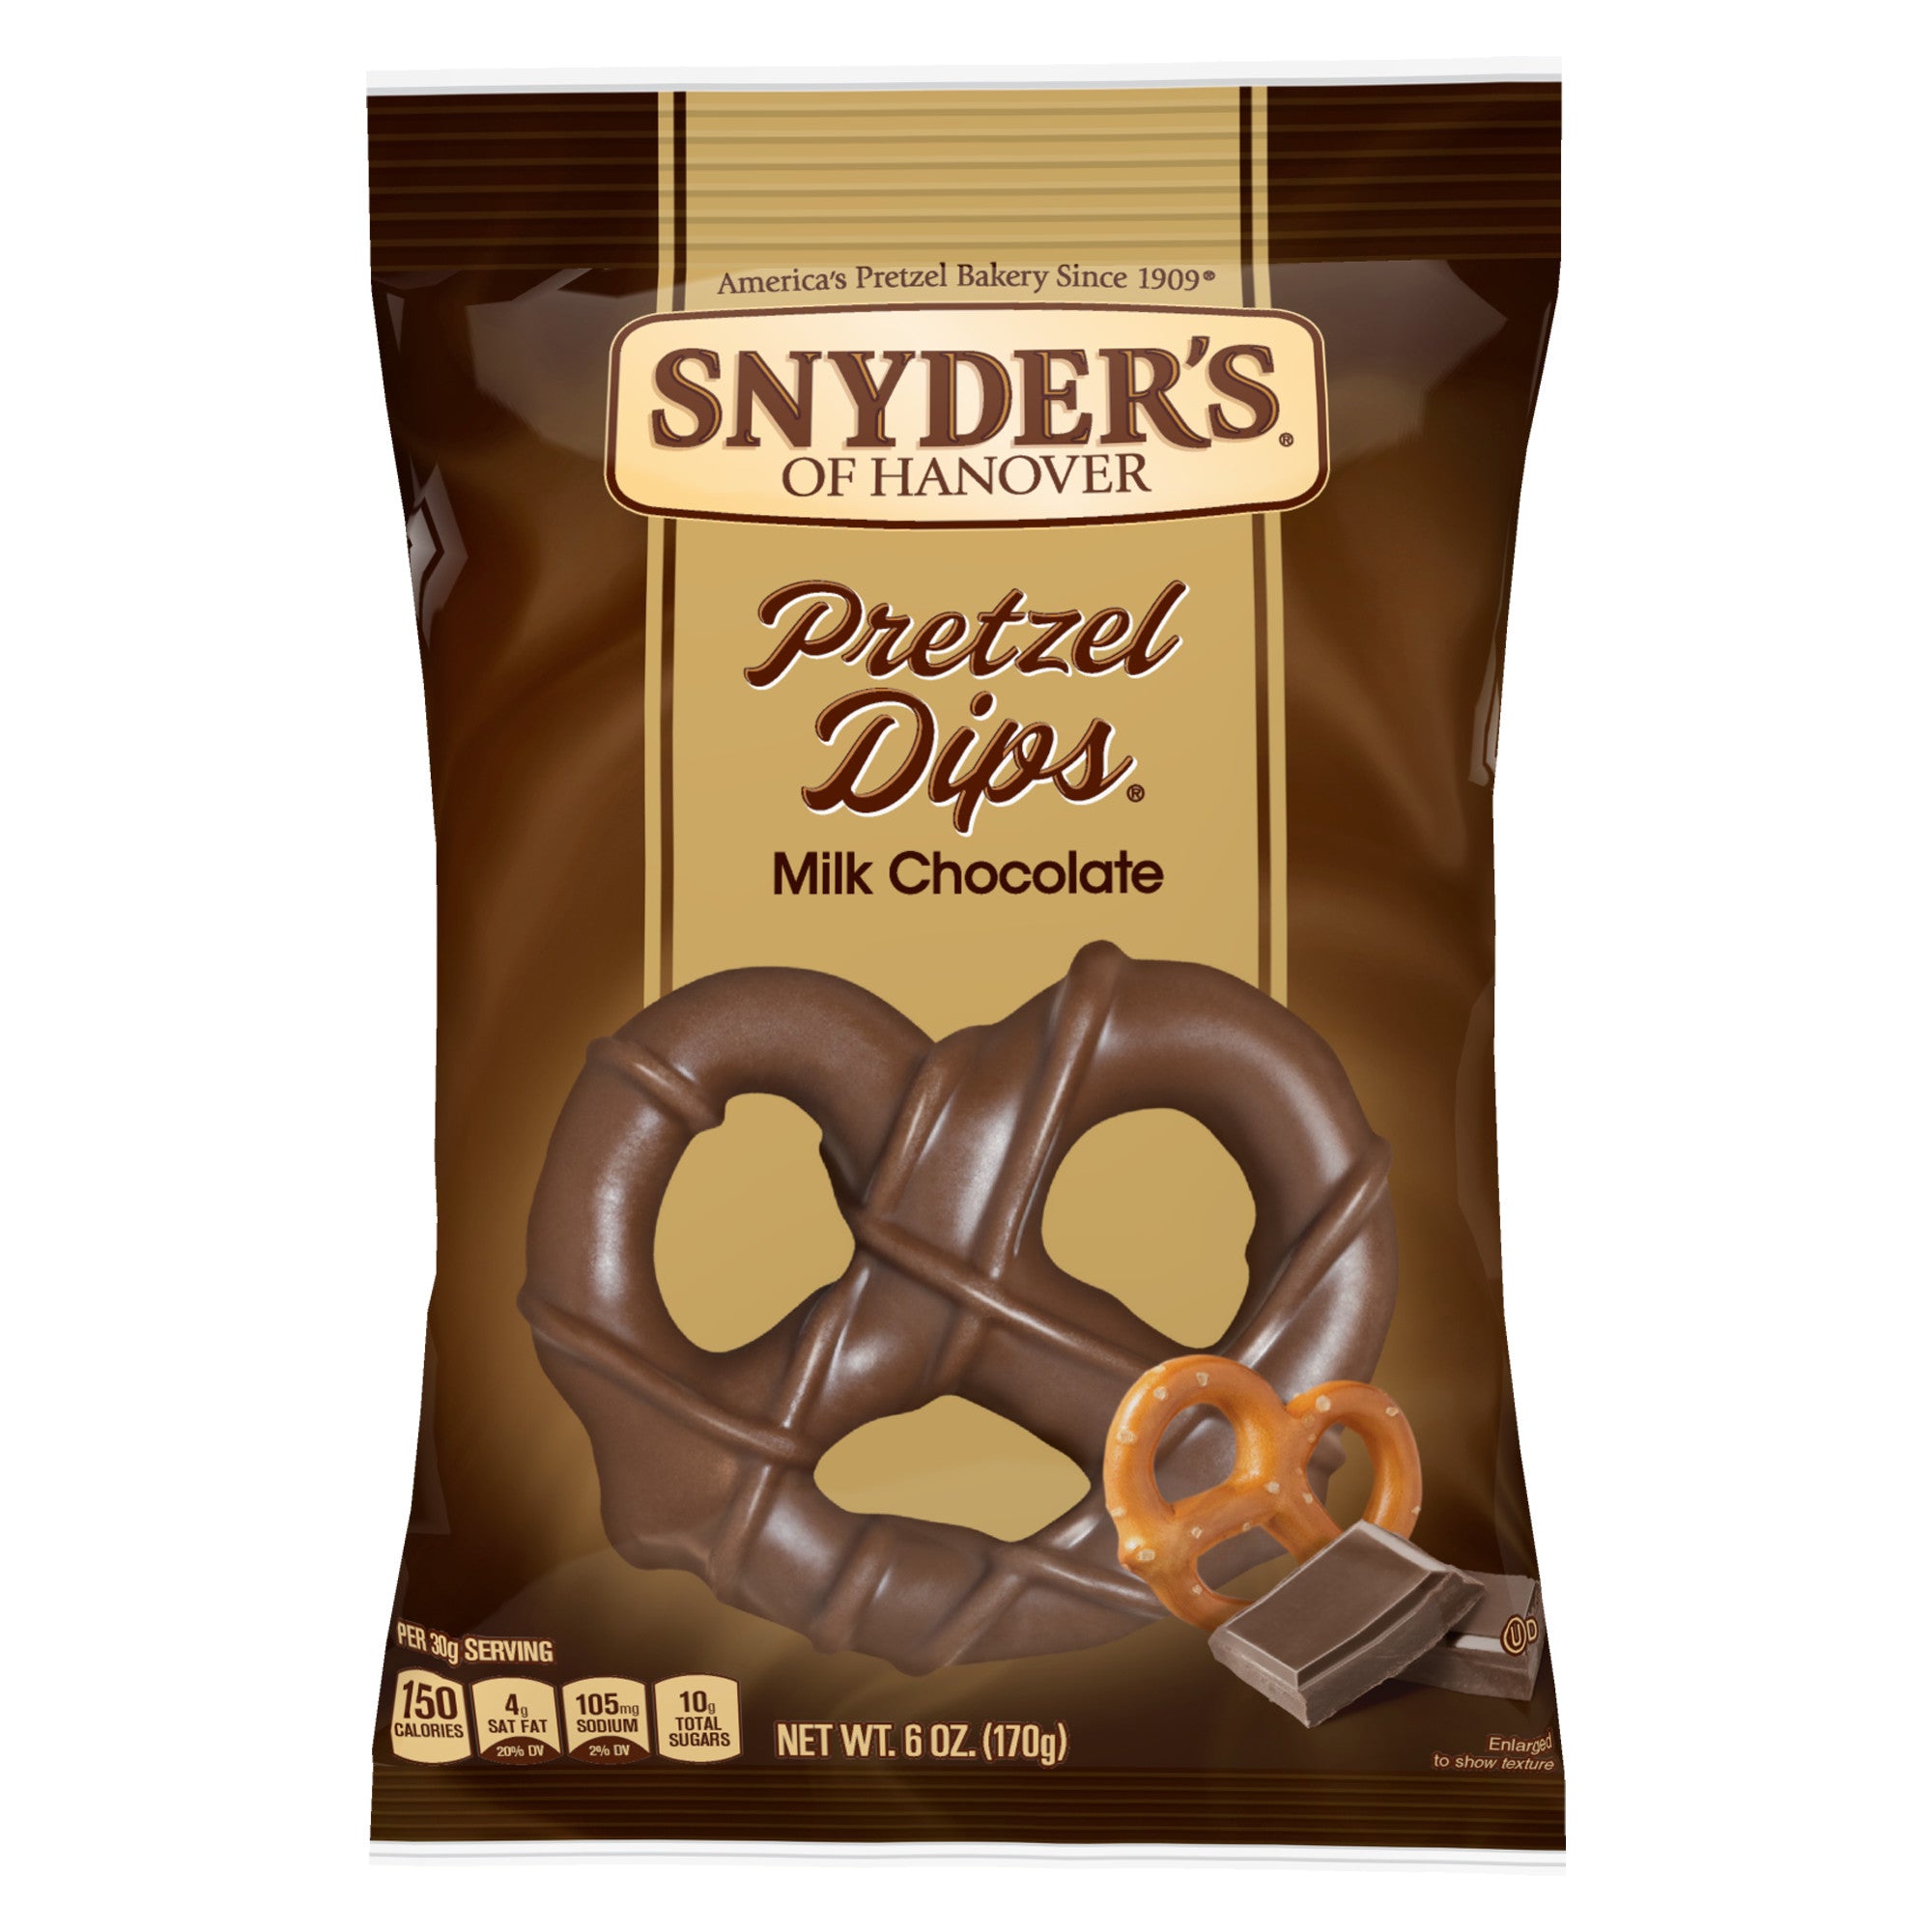 Snyder's of Hanover Pretzels, Milk Chocolate Covered Pretzels